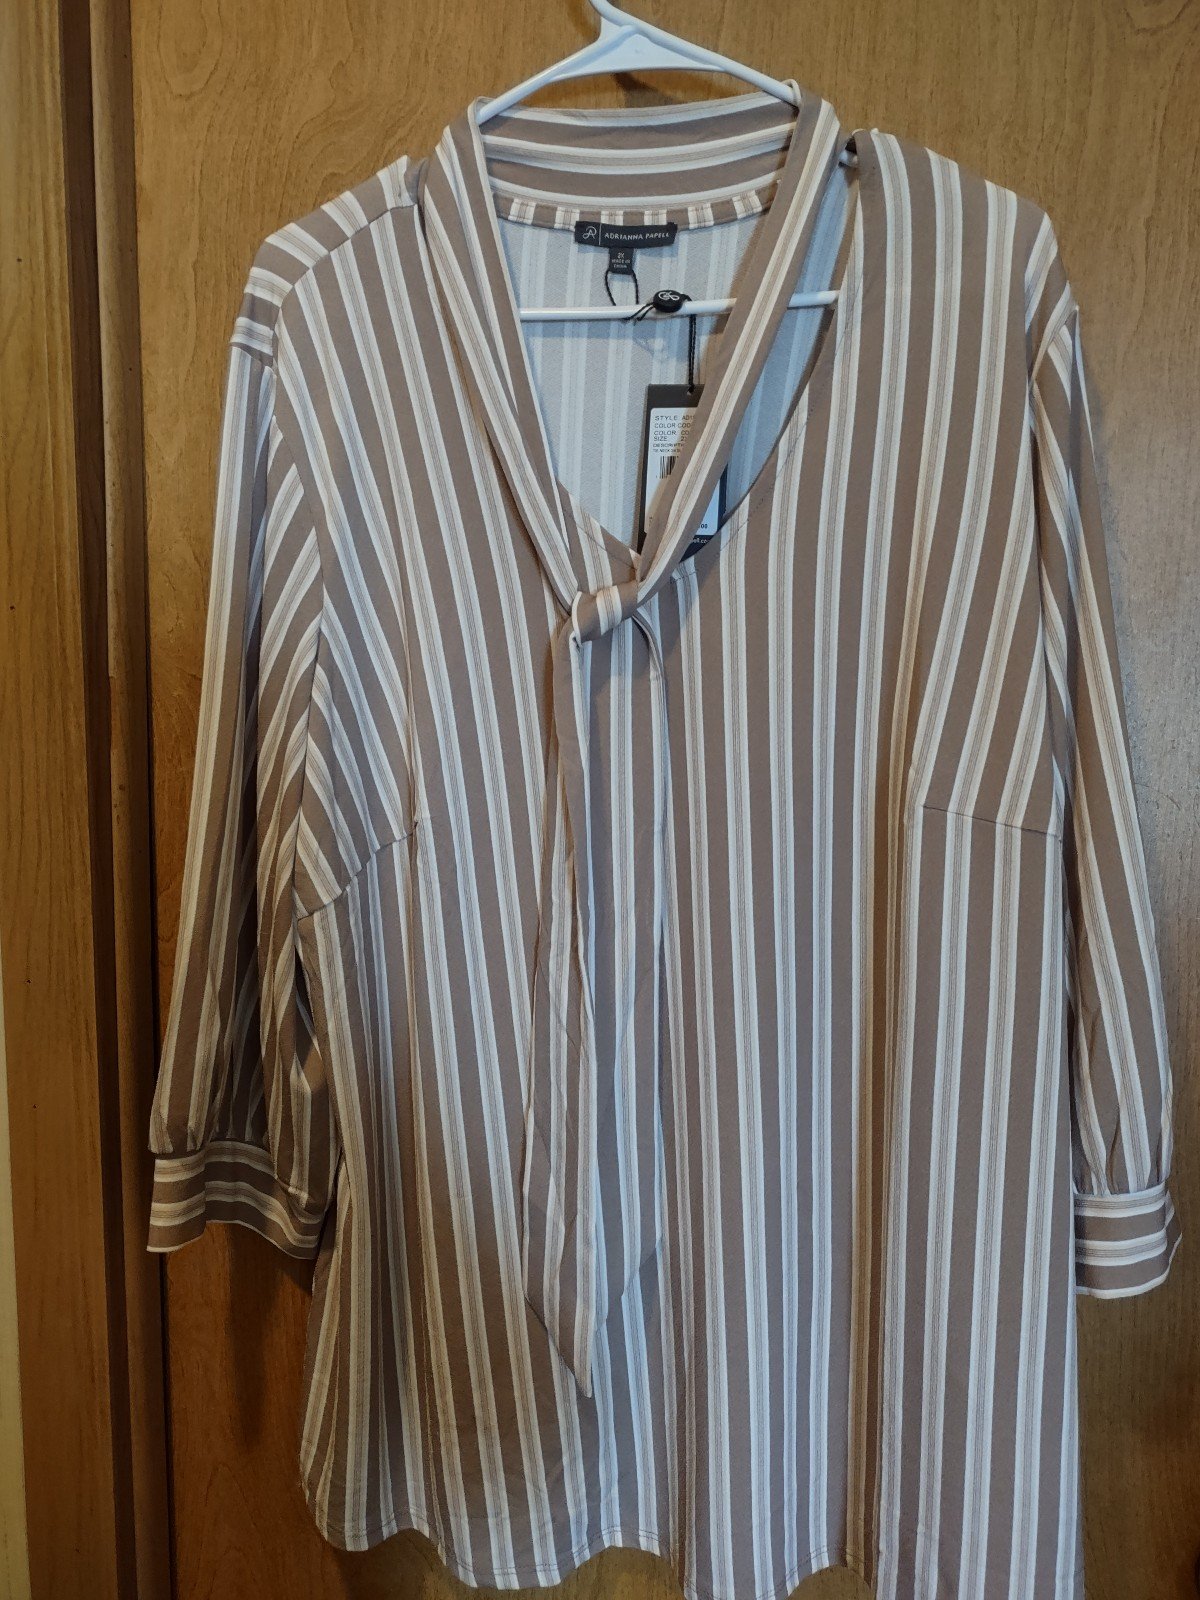 where to buy  Adrianna Papell striped blouse GLqxxhk9F 